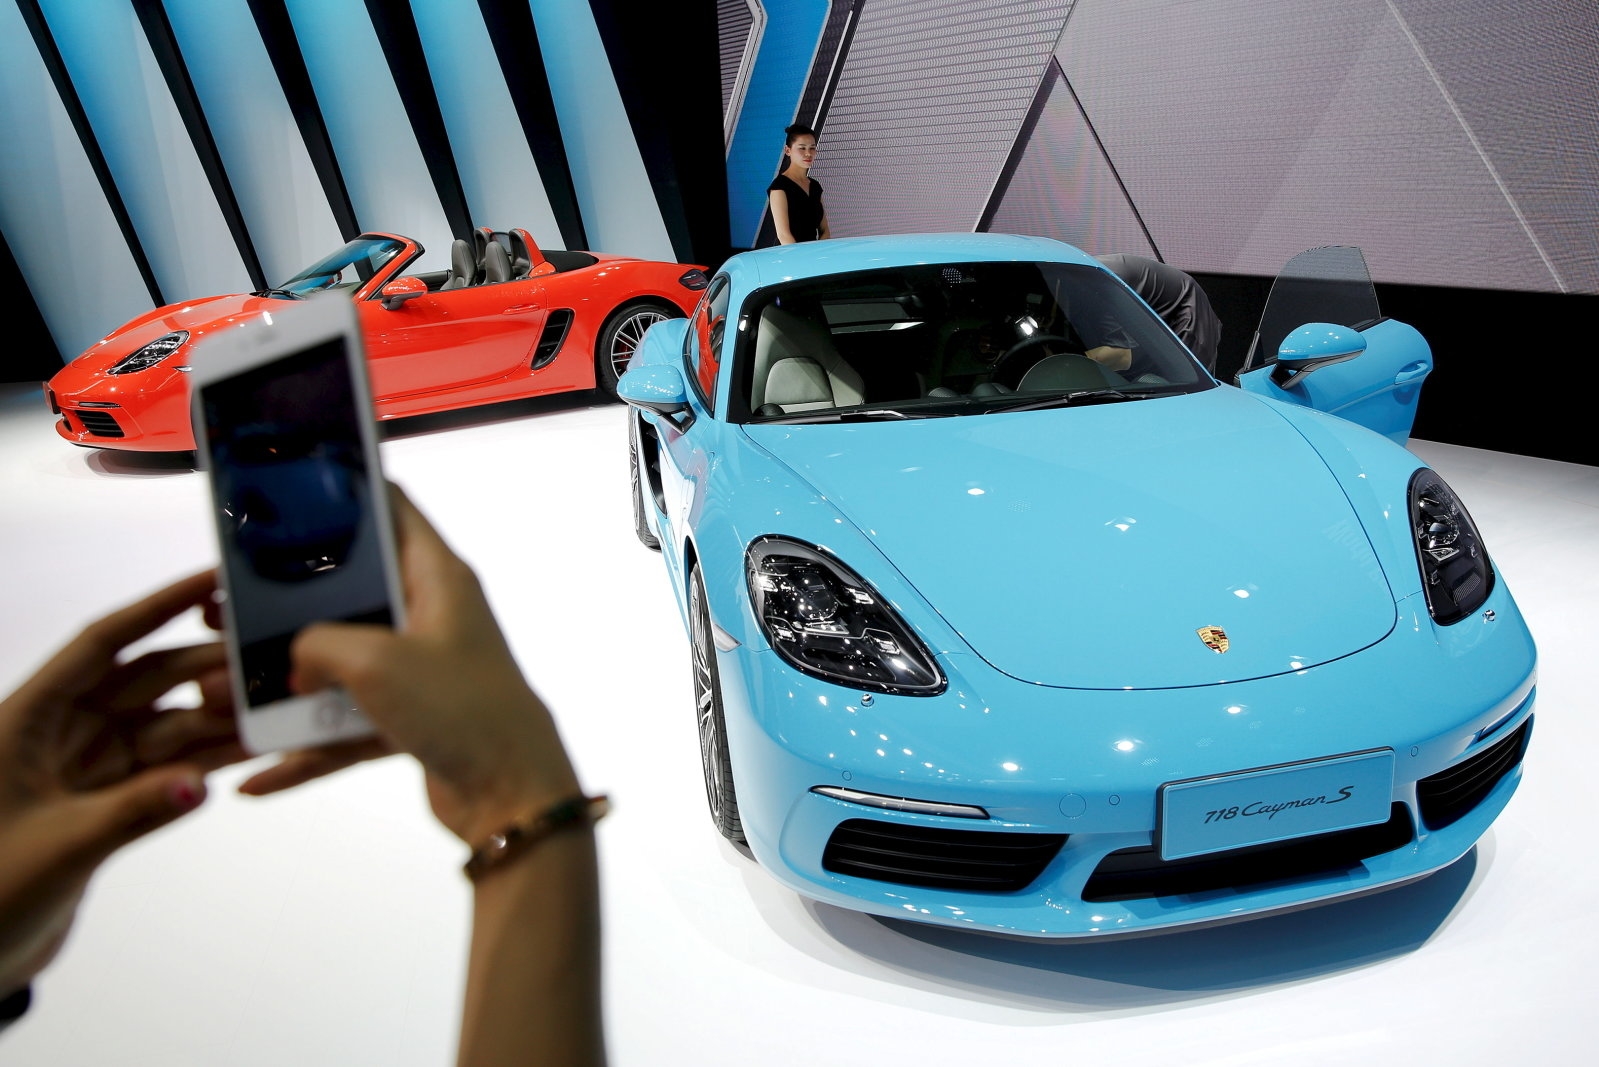 Porsche's $2,000 Passport subscription swaps cars on demand | DeviceDaily.com